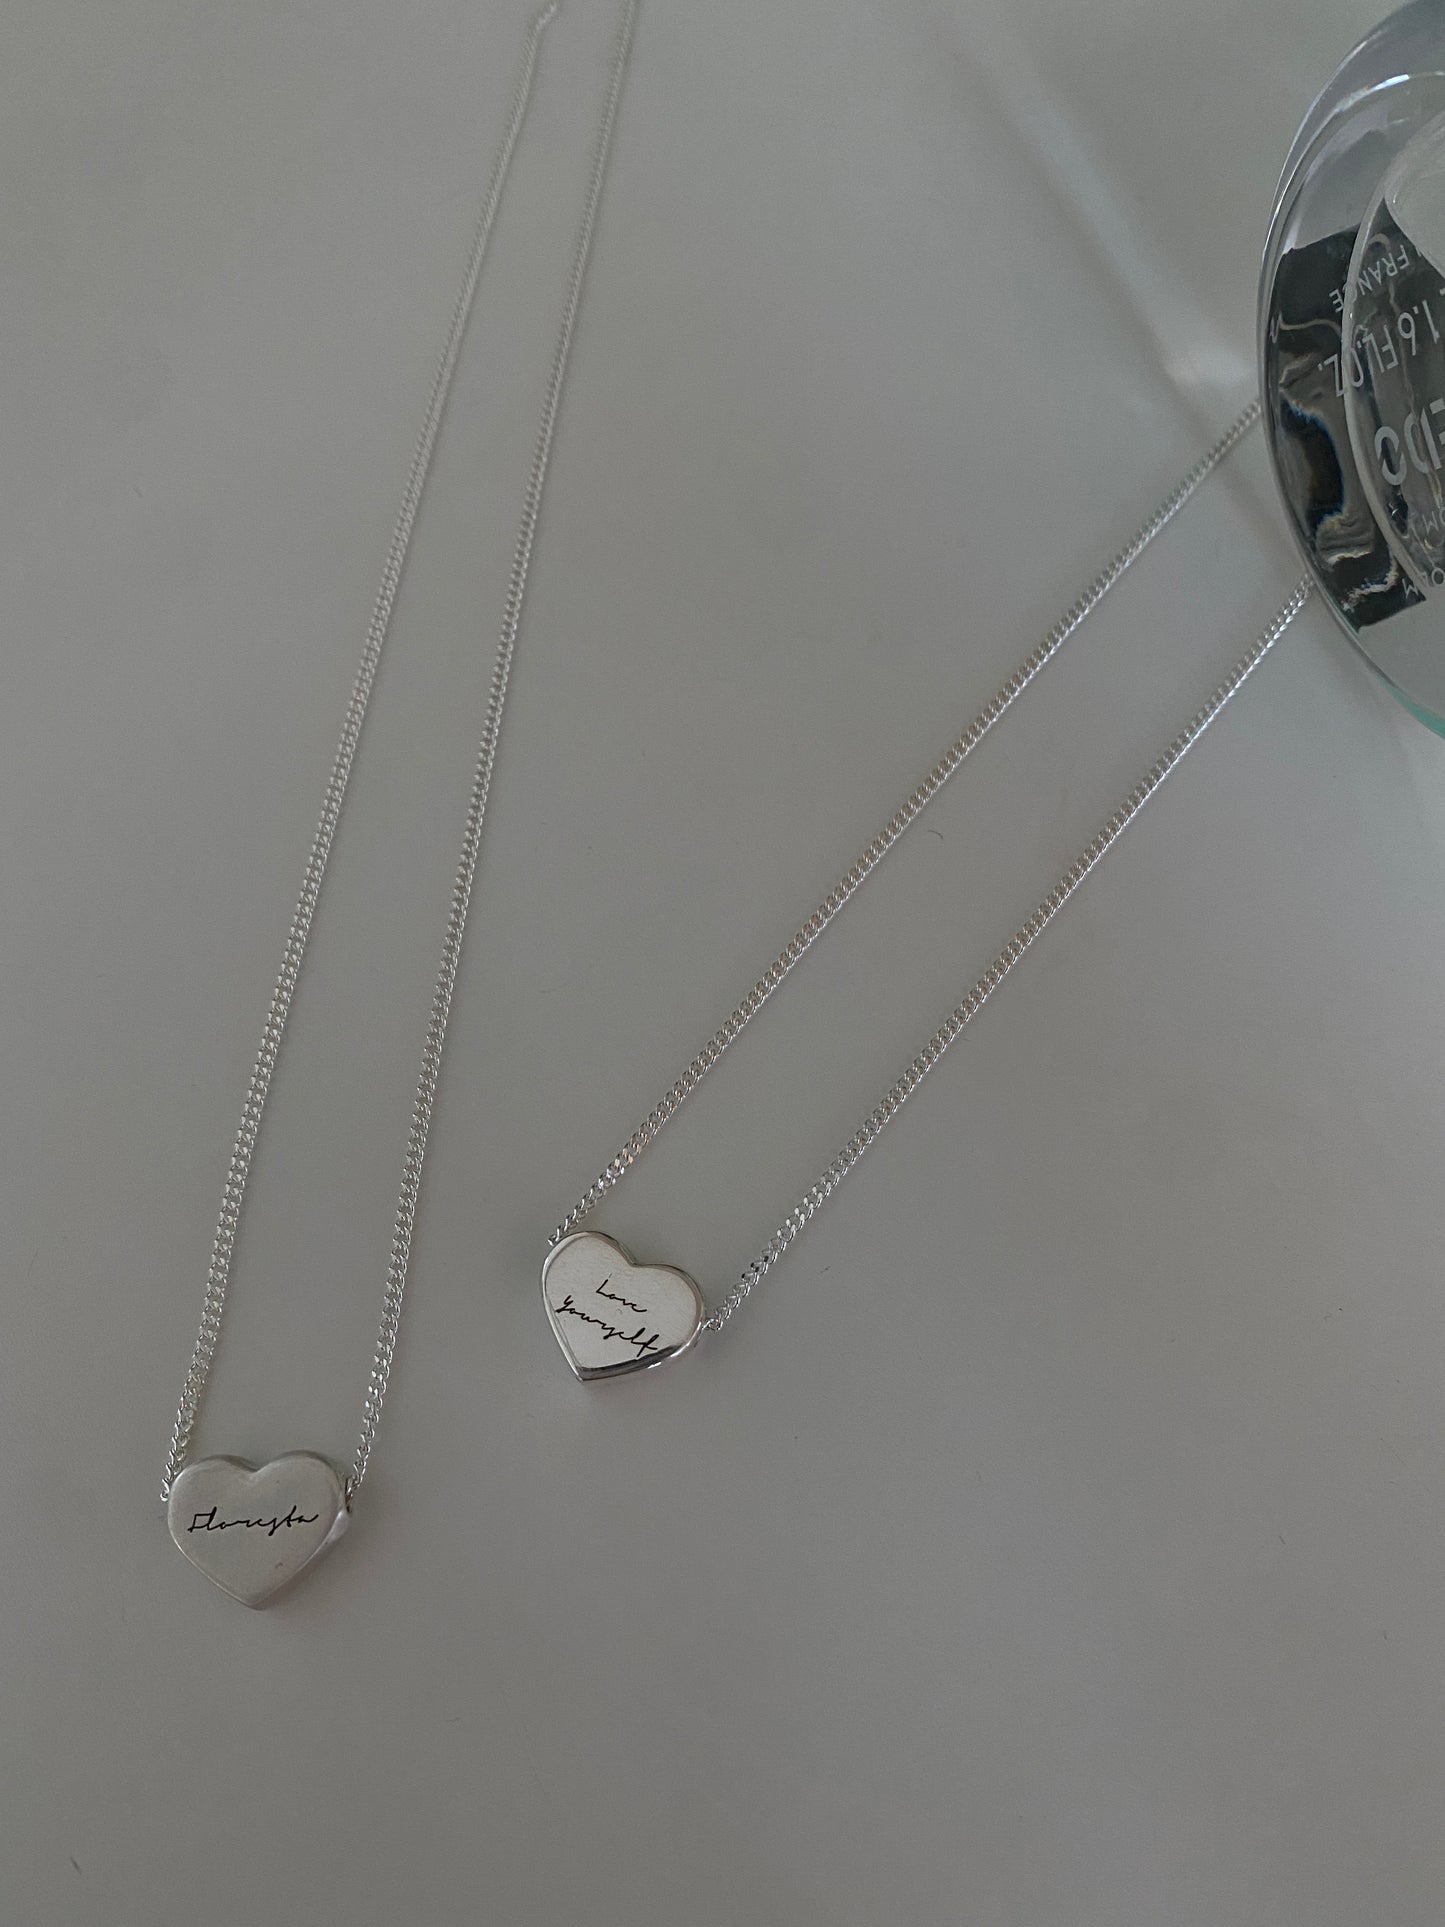 【Engraving 訂製刻字】925 Silver “My dear ___” Necklace